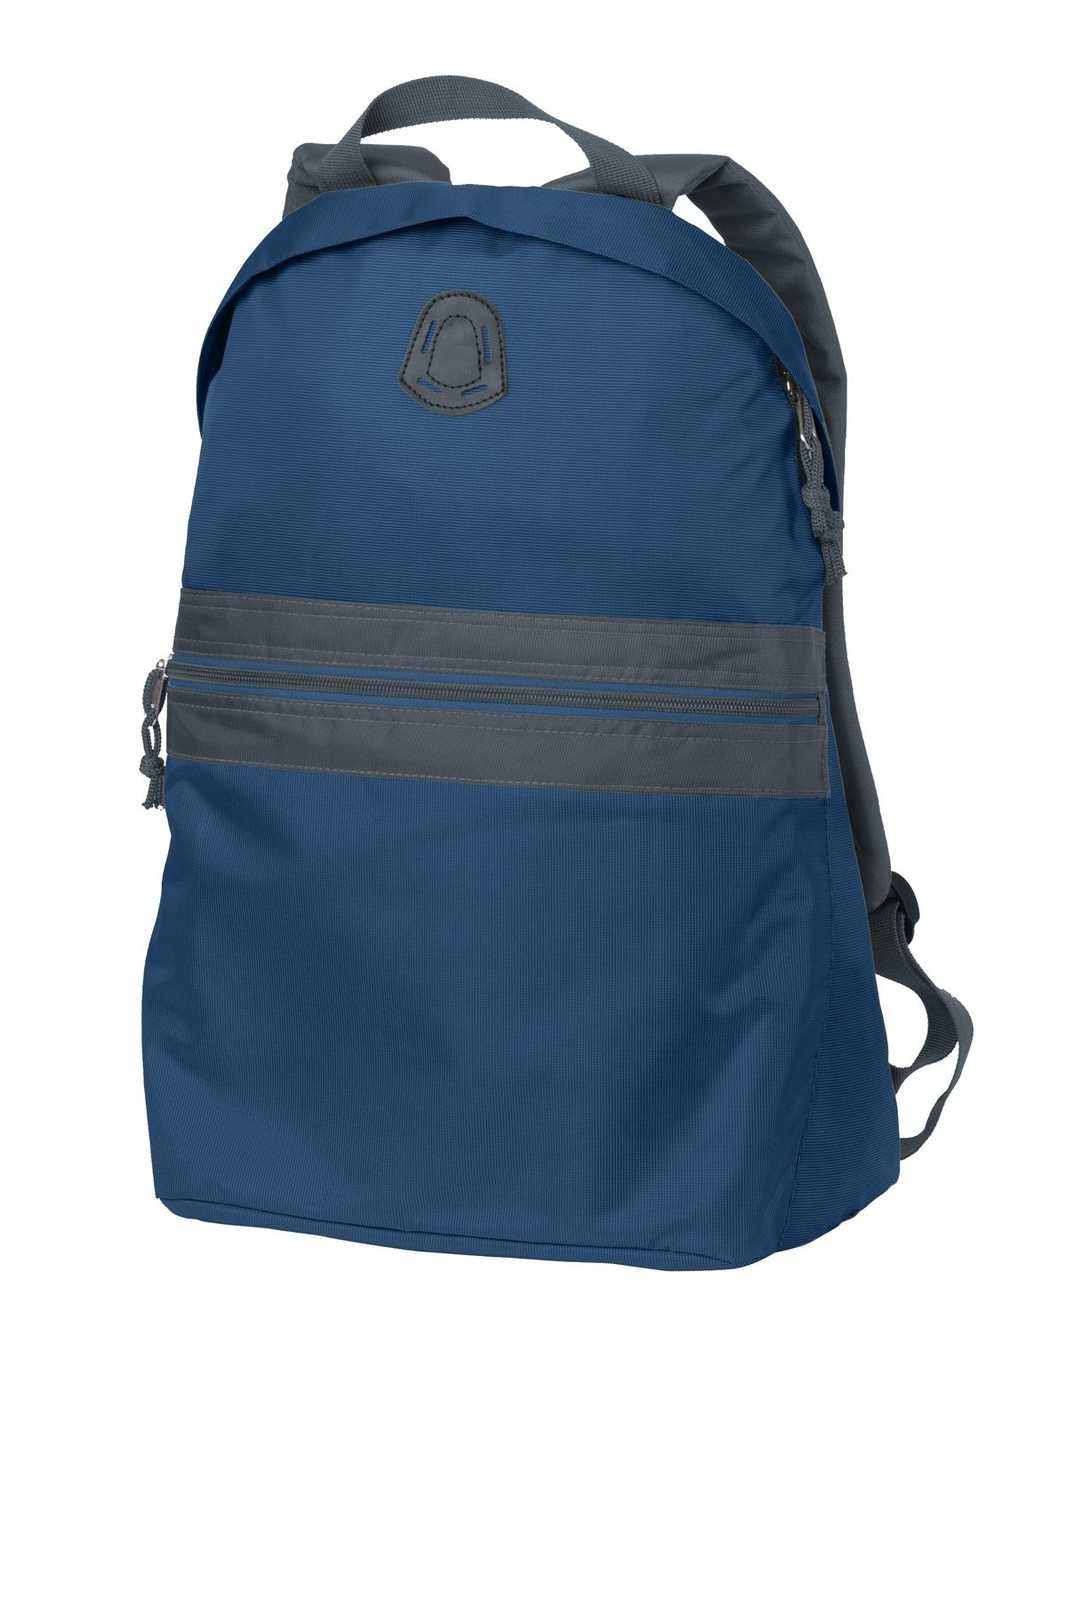 Port Authority BG202 Nailhead Backpack - Cambridge Blue Smoke Gray - HIT a Double - 1